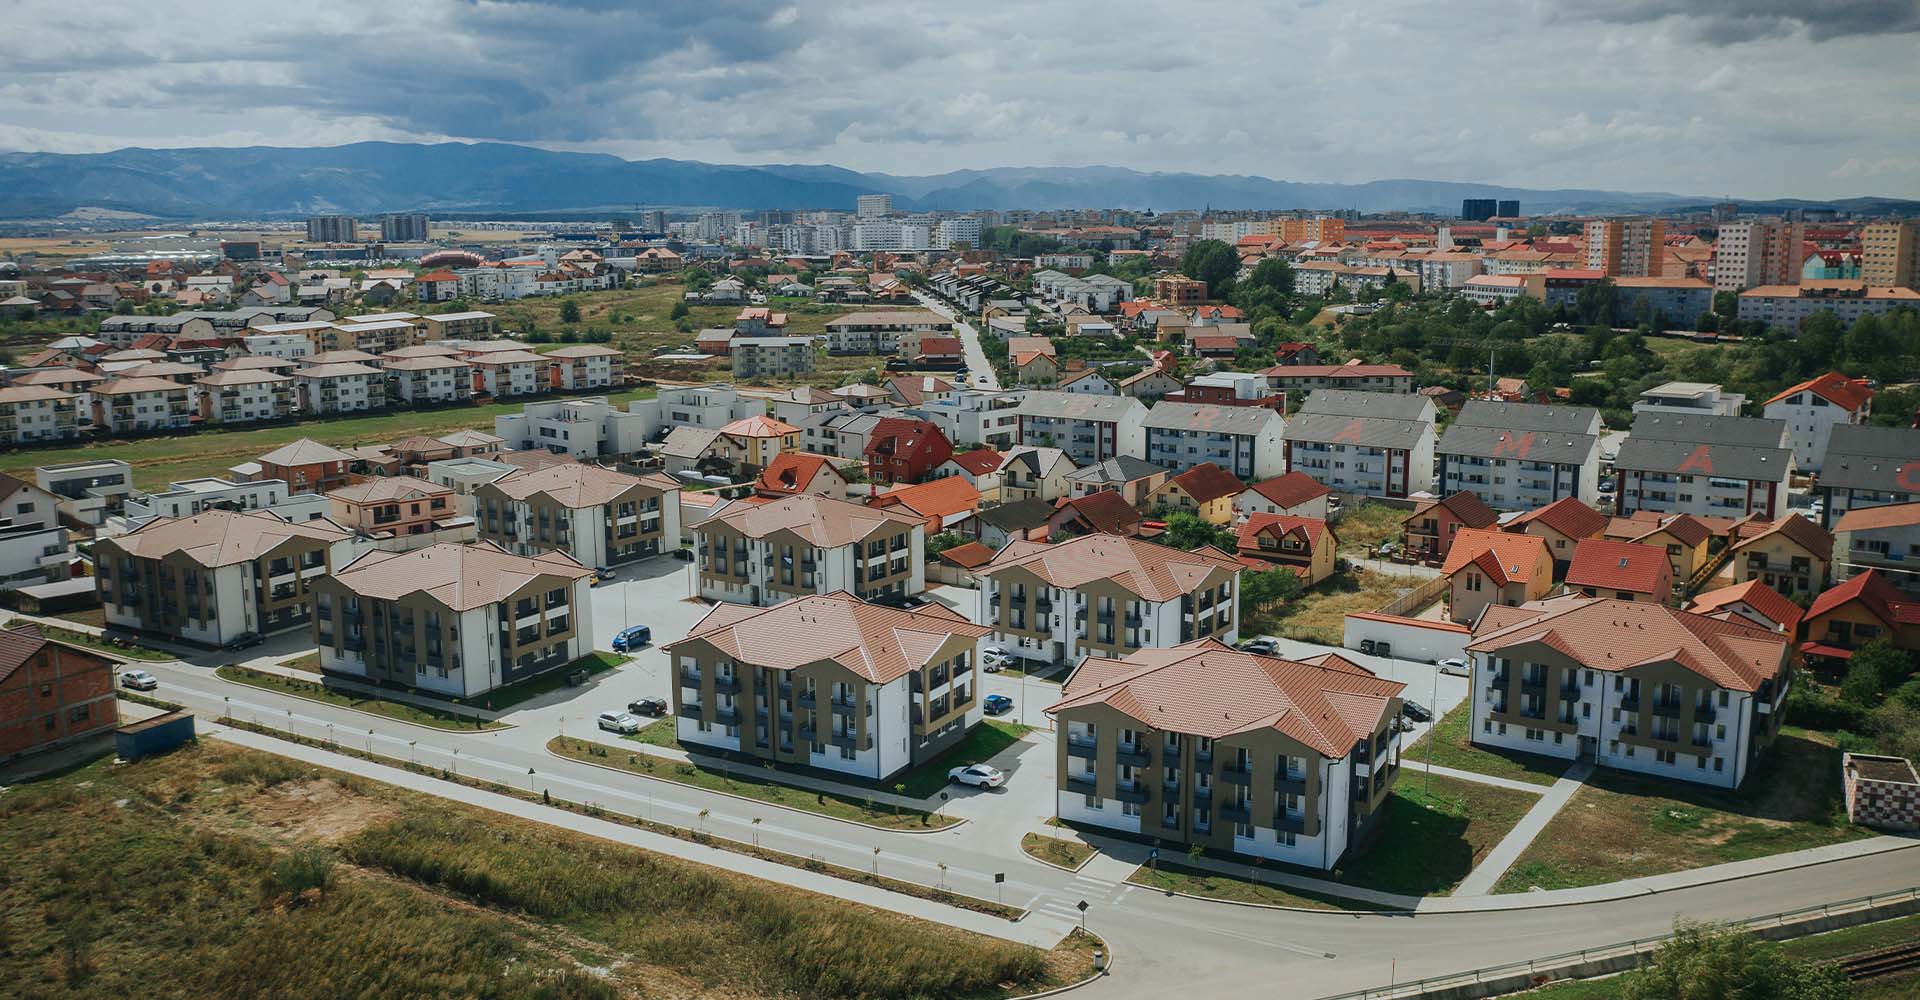 EBS Residence, Selimbar (168 apartments)